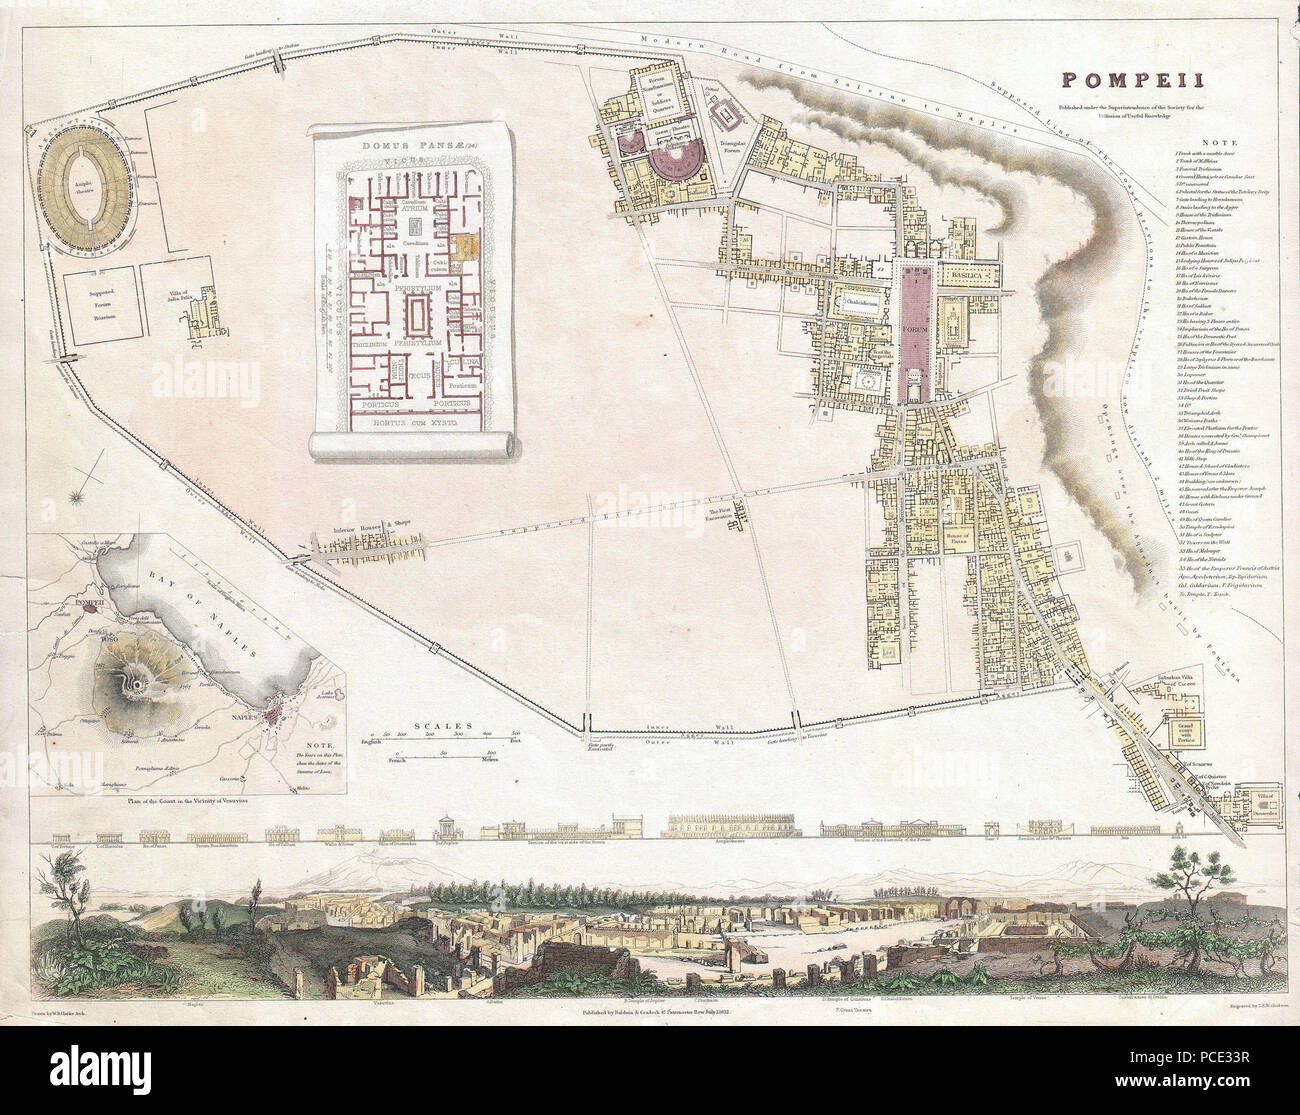 7 1832 S.D.U.K. Stadt Plan oder eine Karte von Pompeji, Italien - Geographicus - Pompeji - SDUK-1832 Stockfoto